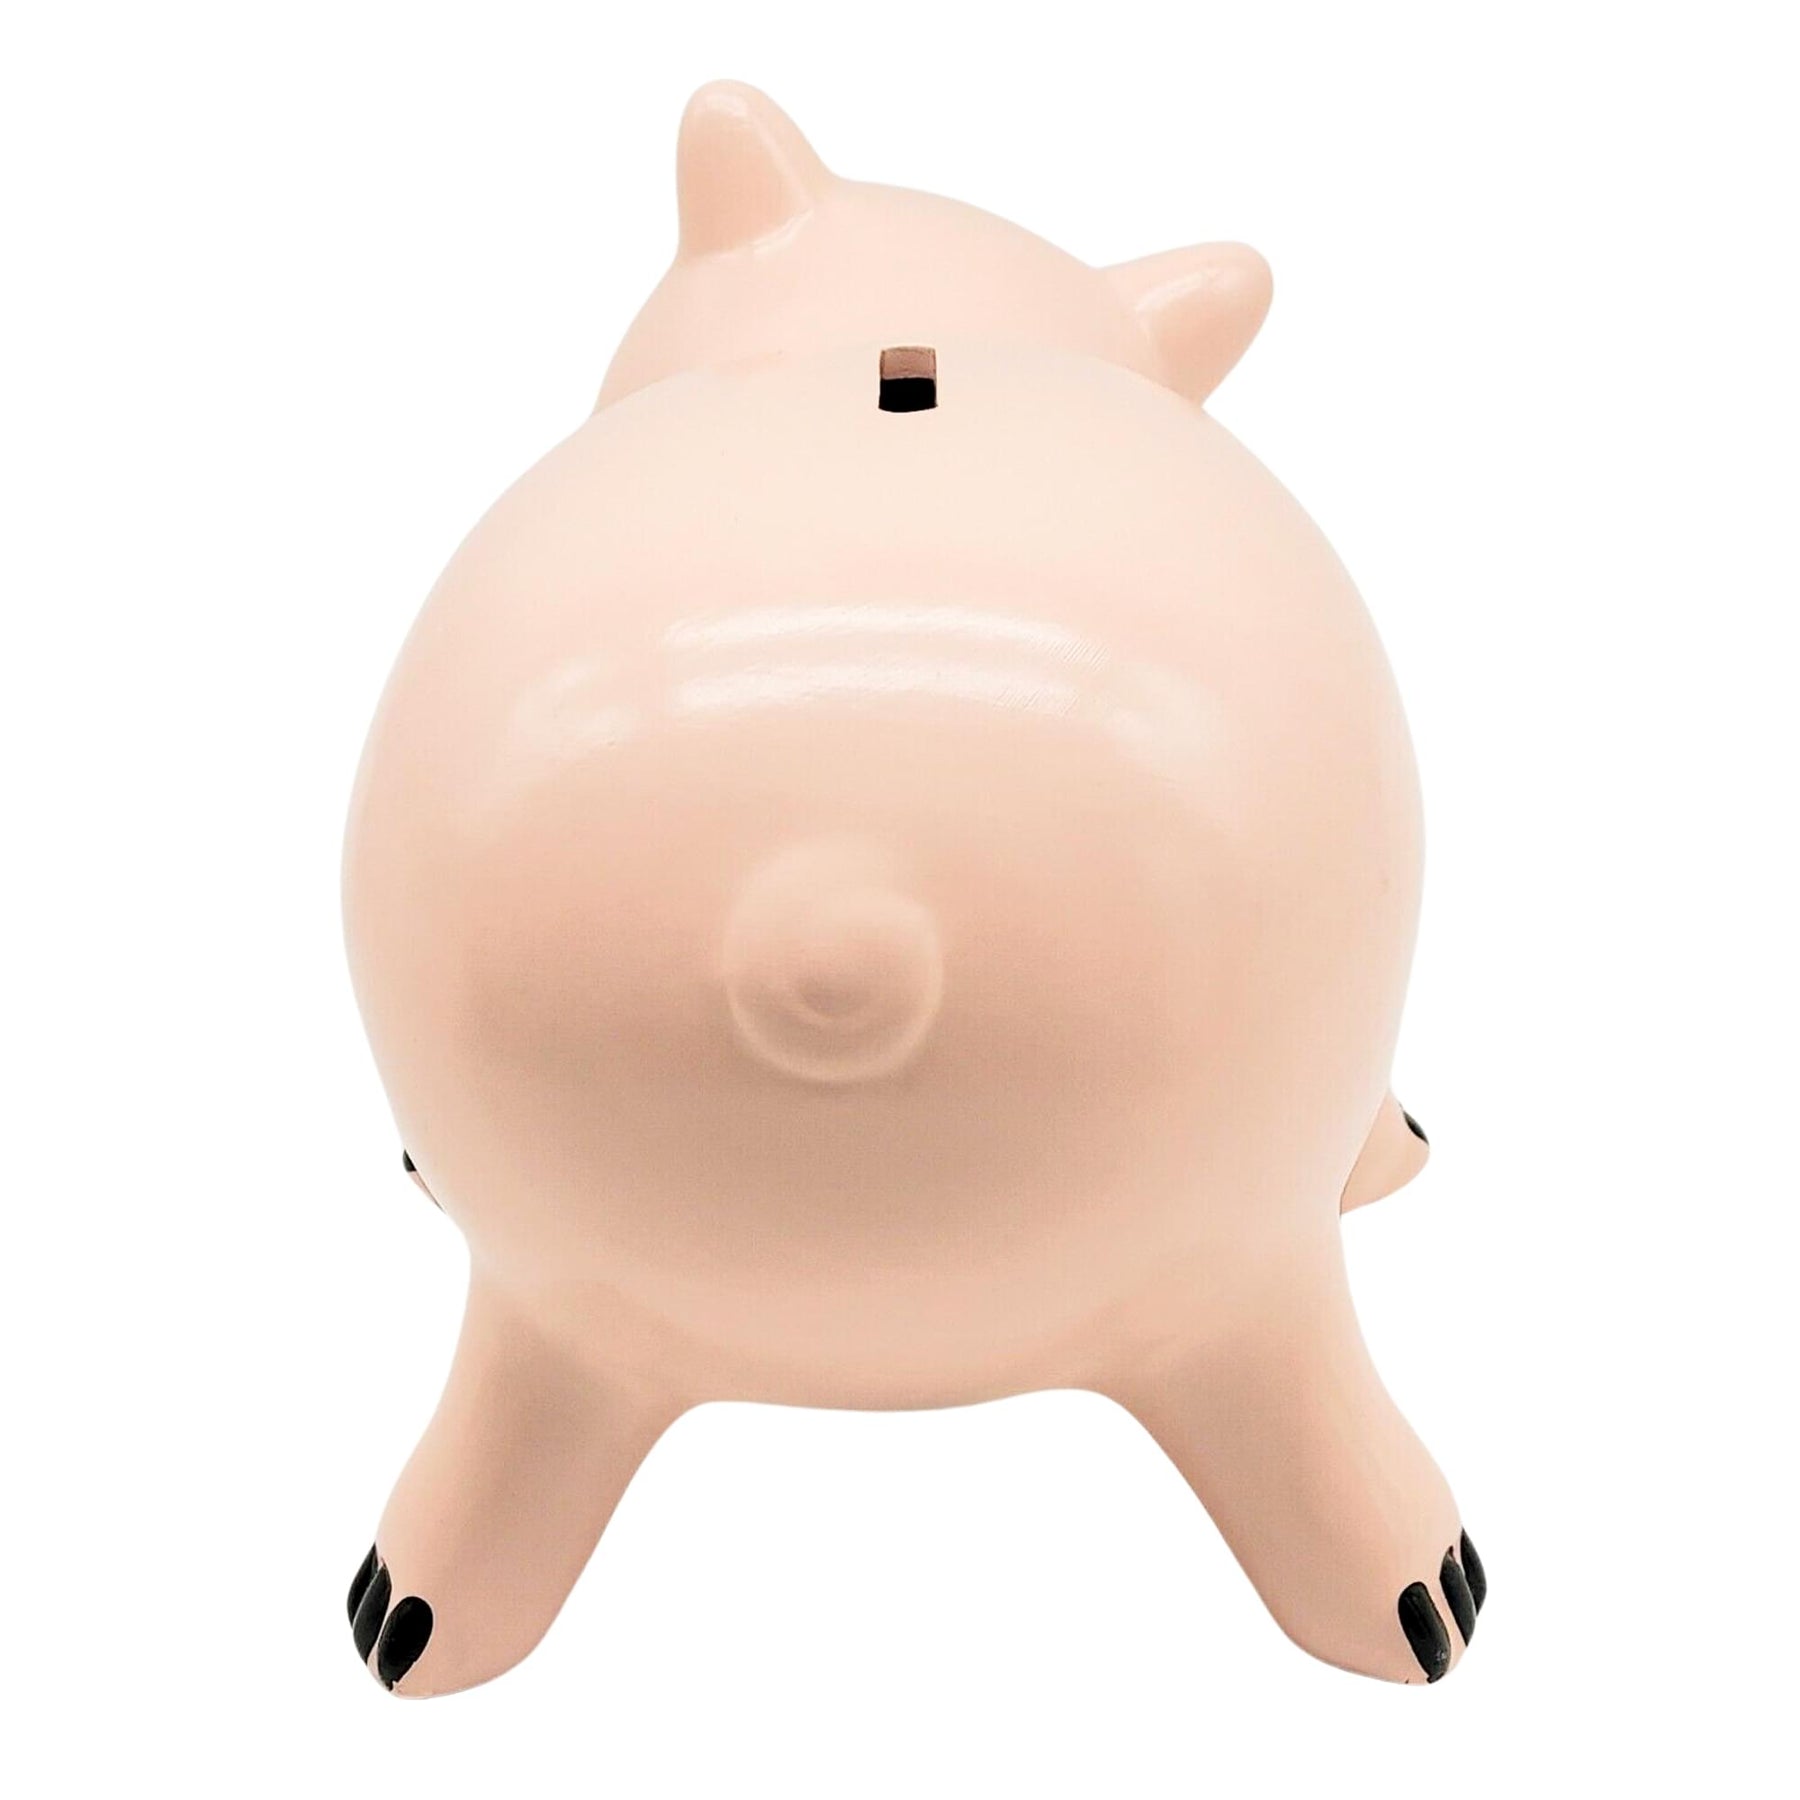 Disney Toy Story Hamm 9 Inch Ceramic Piggy Bank